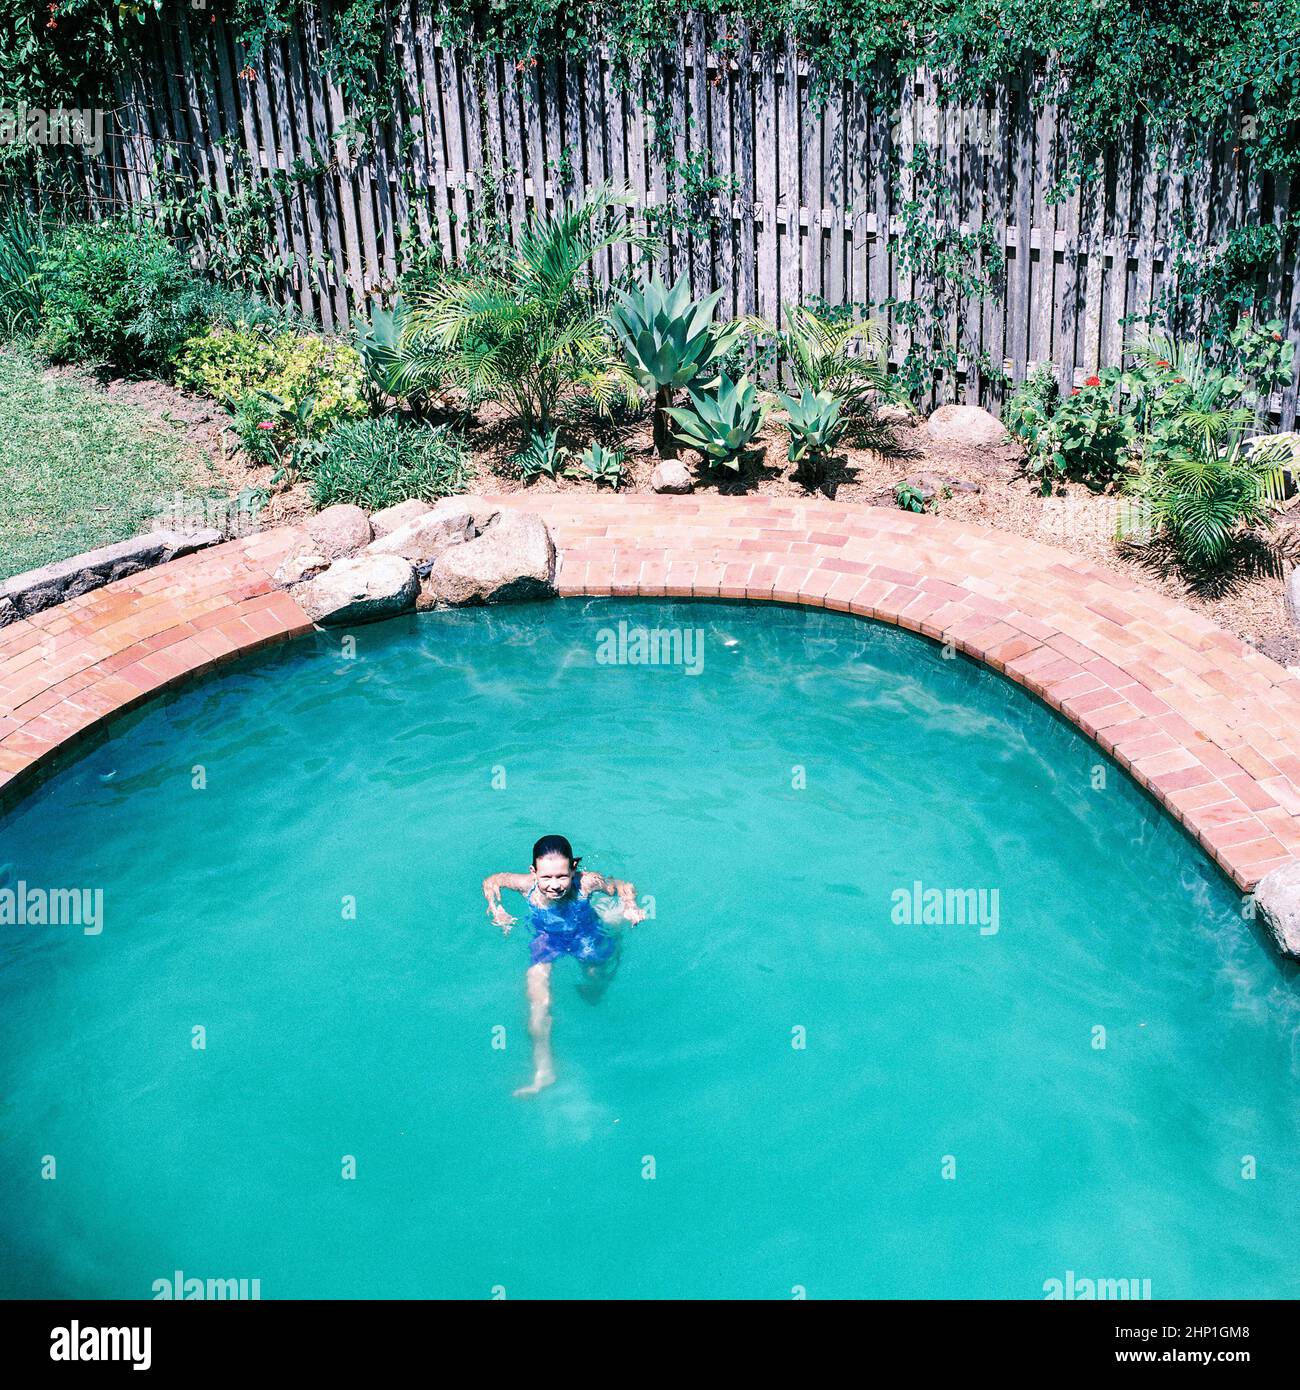 Swimming pool, Brisbane, Queensland, Australia. Stock Photo